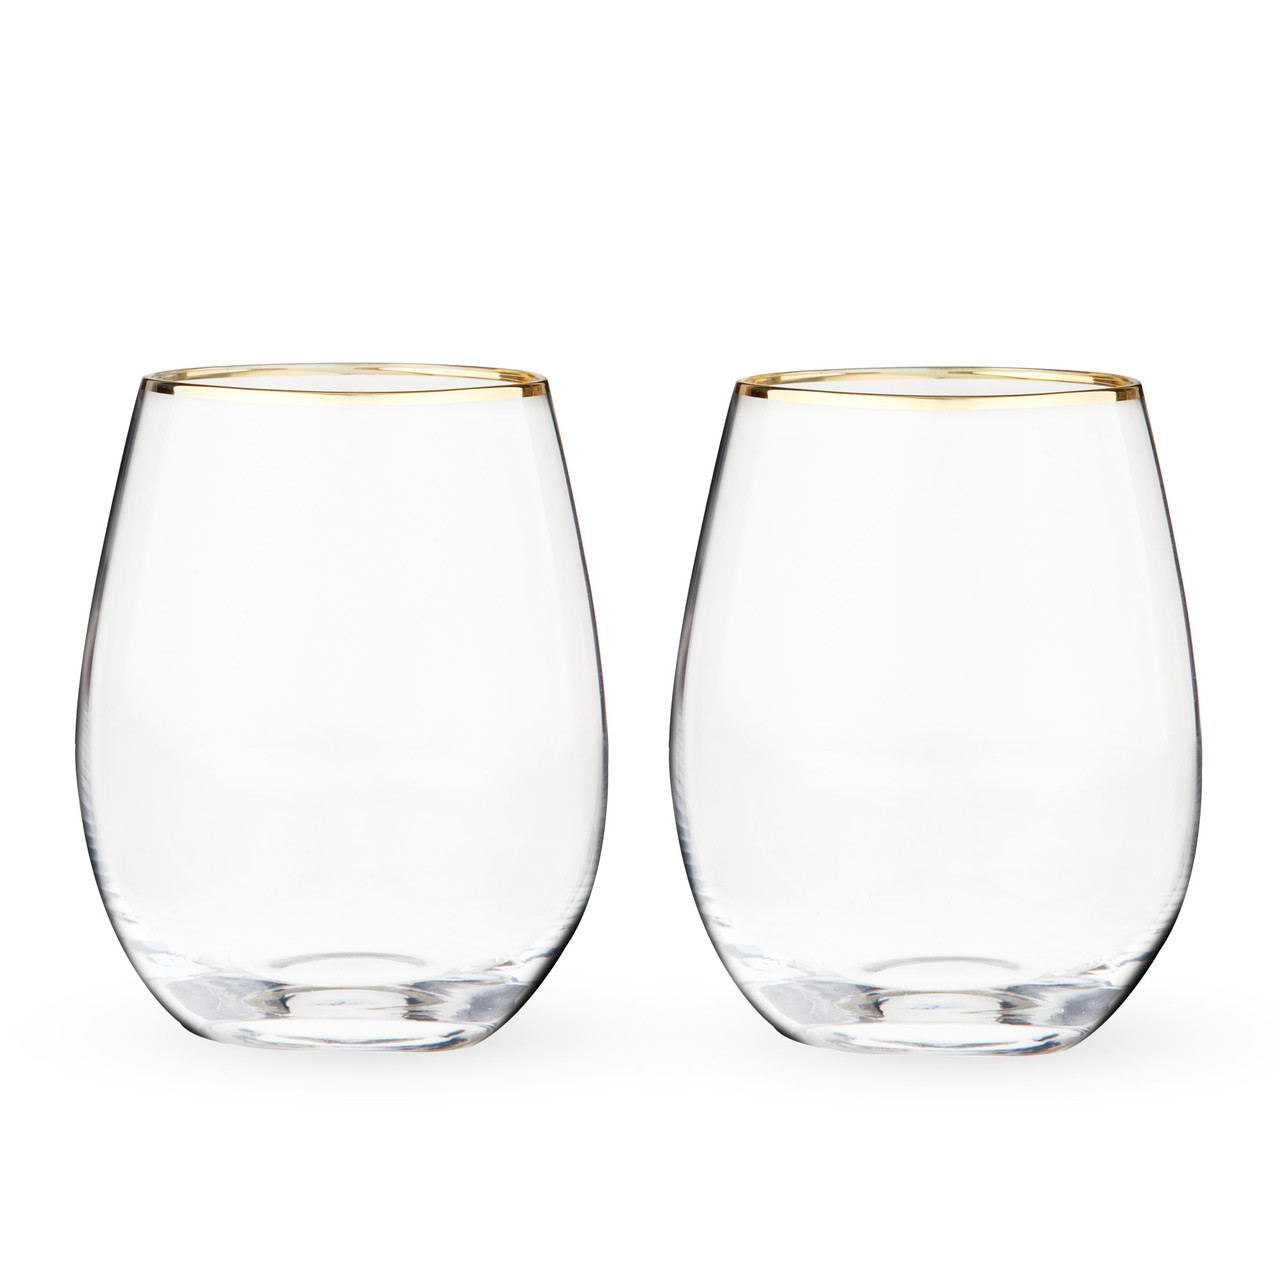 Gilded Stemless Wine Glass Set by Twine